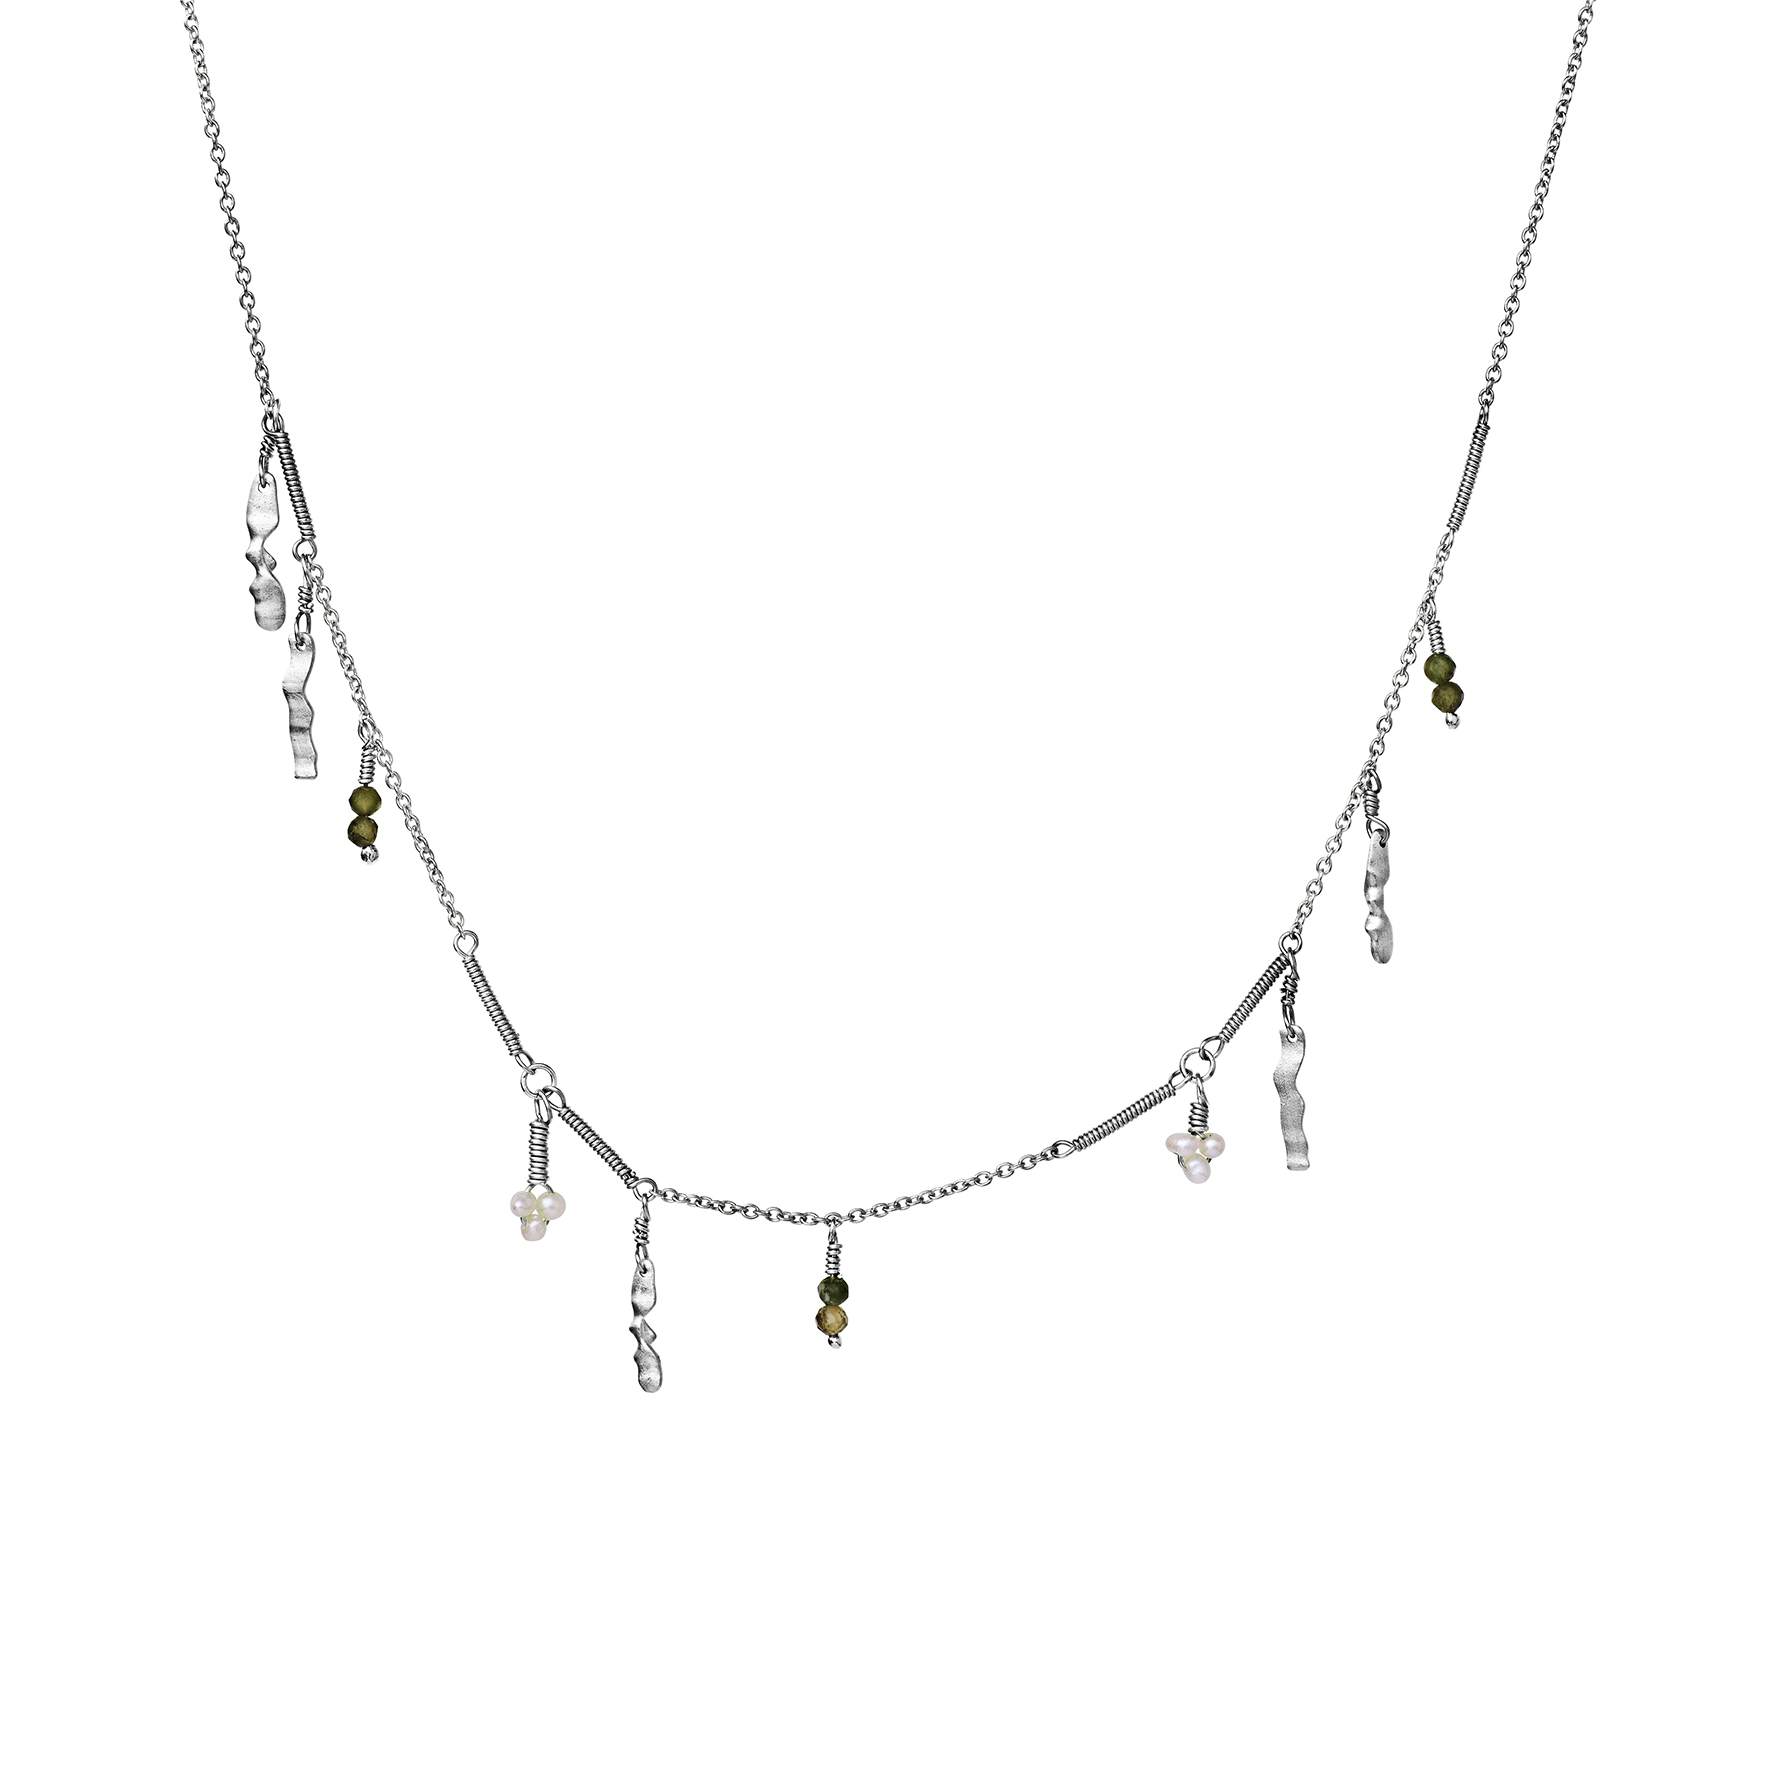 Bergdis Necklace von Maanesten in Silber Sterling 925| Turmalin,Freshwater Pearl